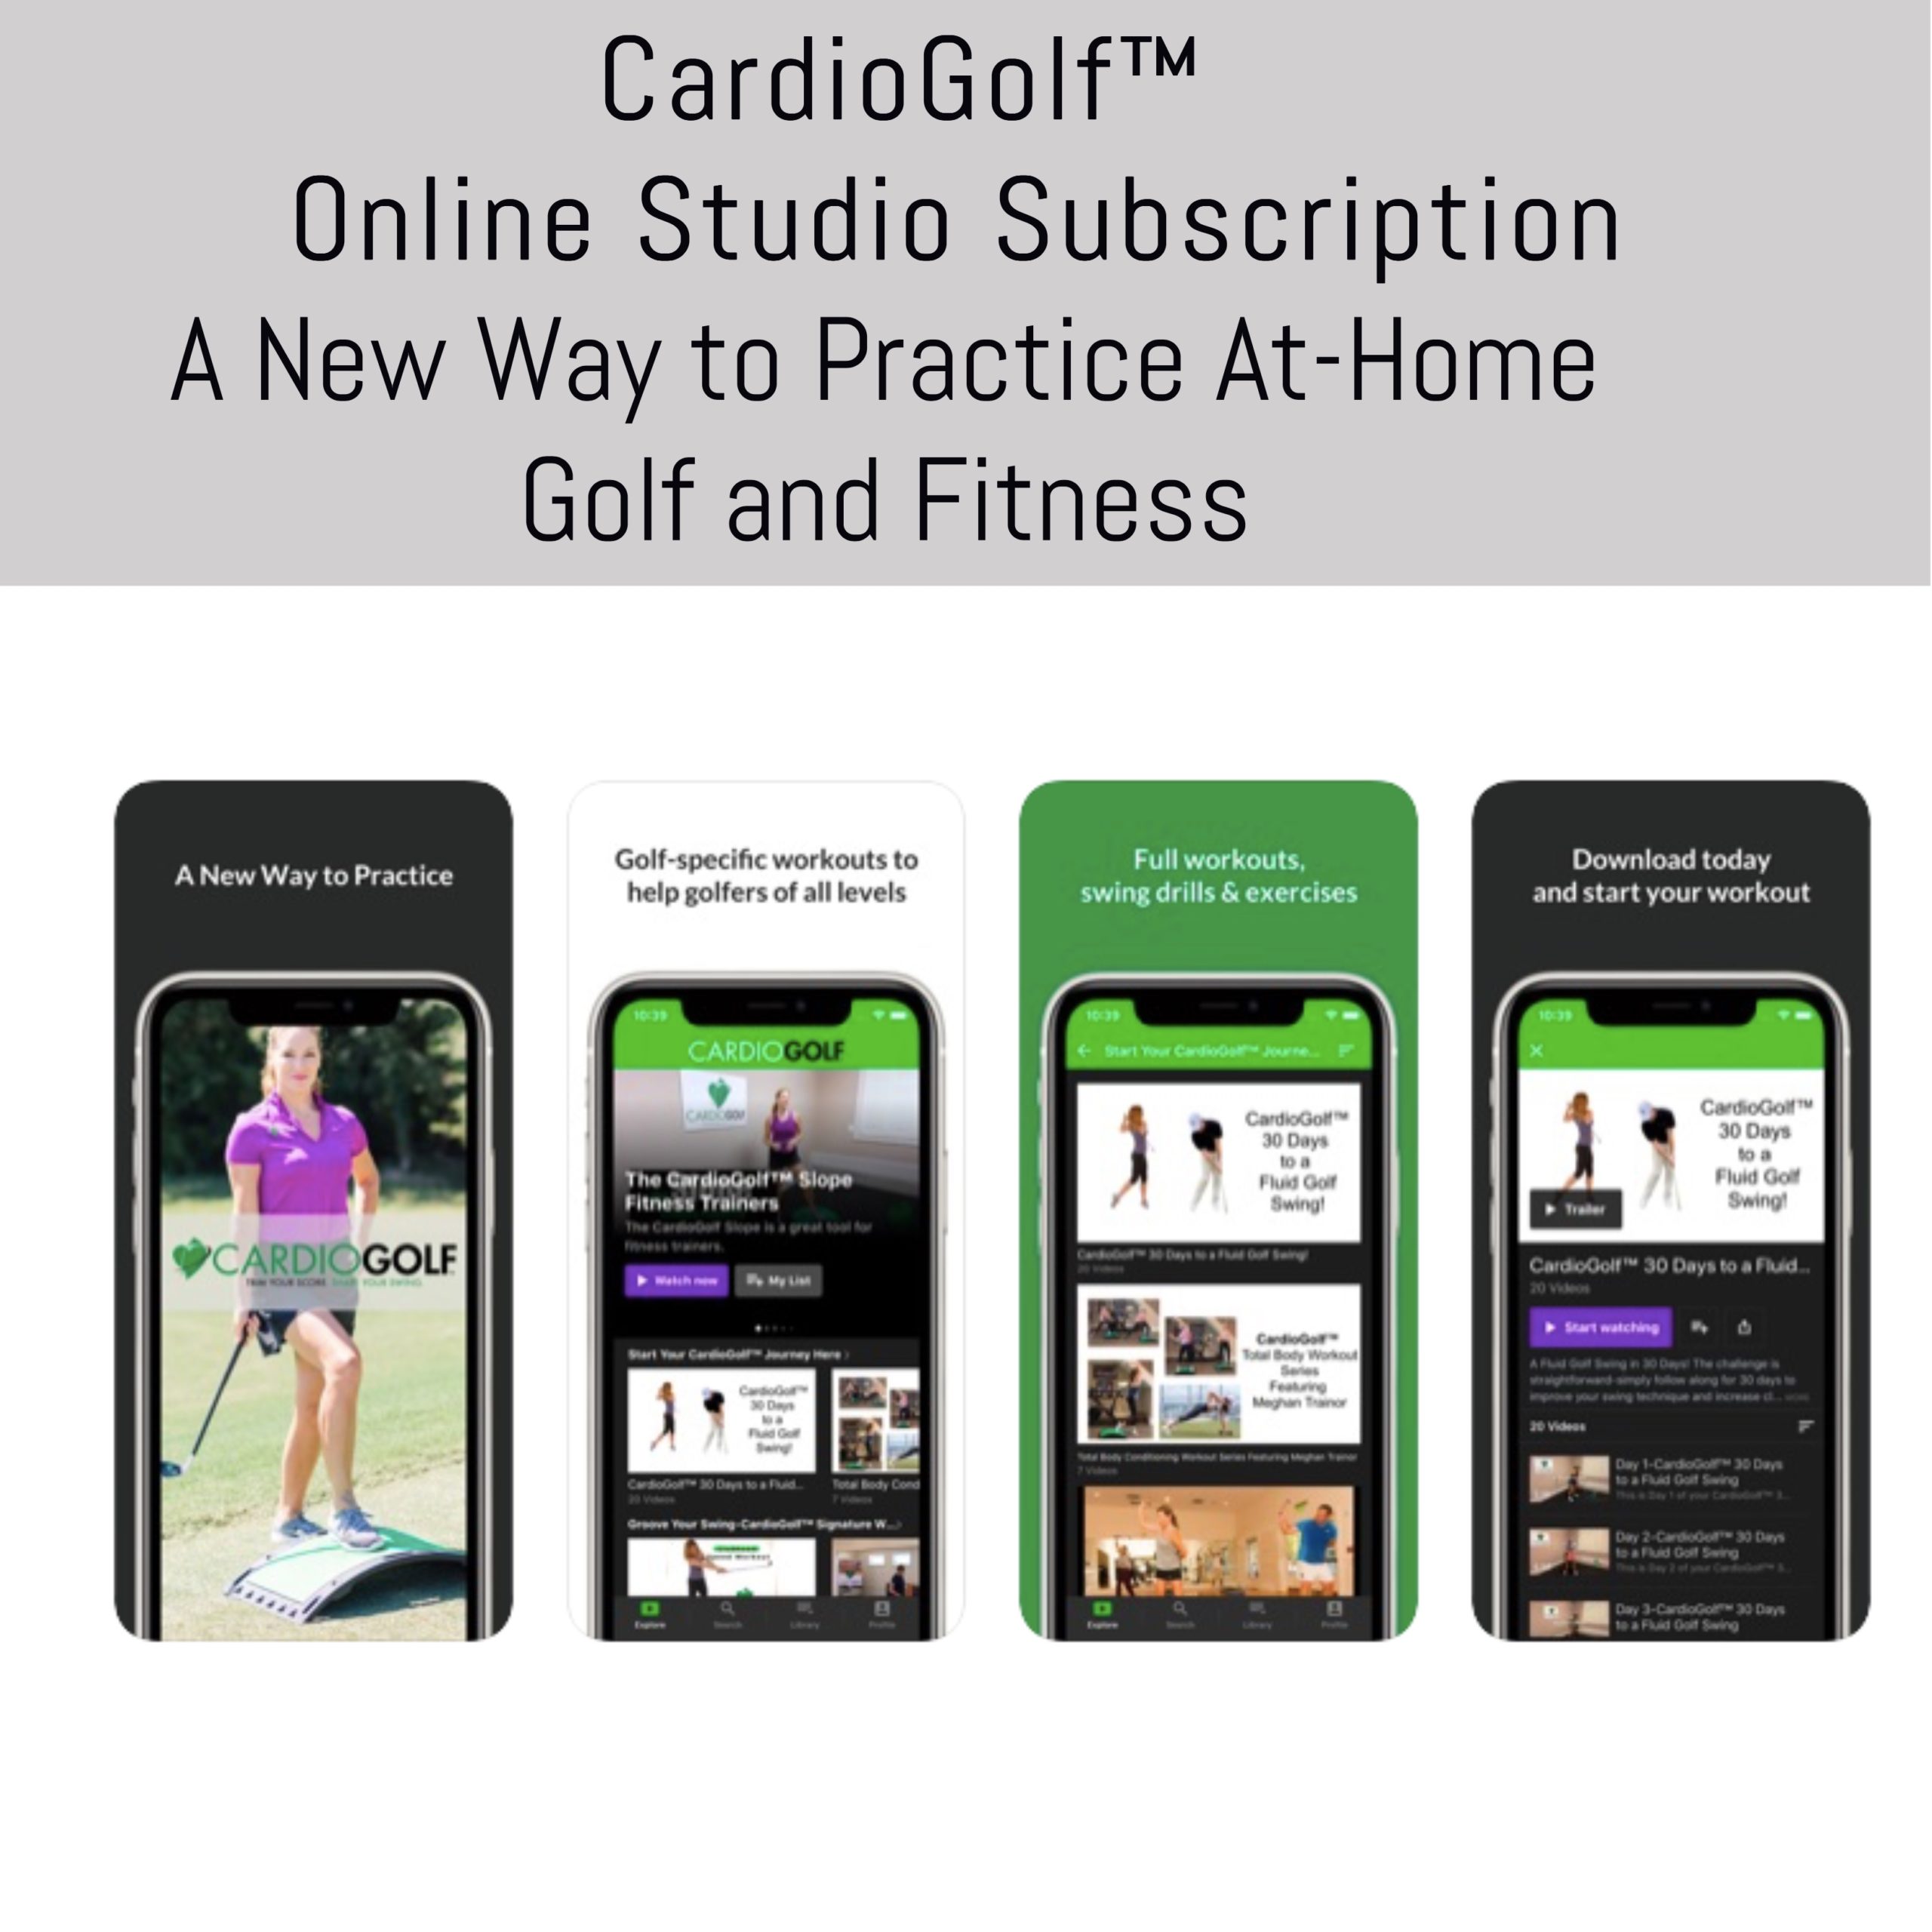 CardioGolf™ Online Studio Subscription